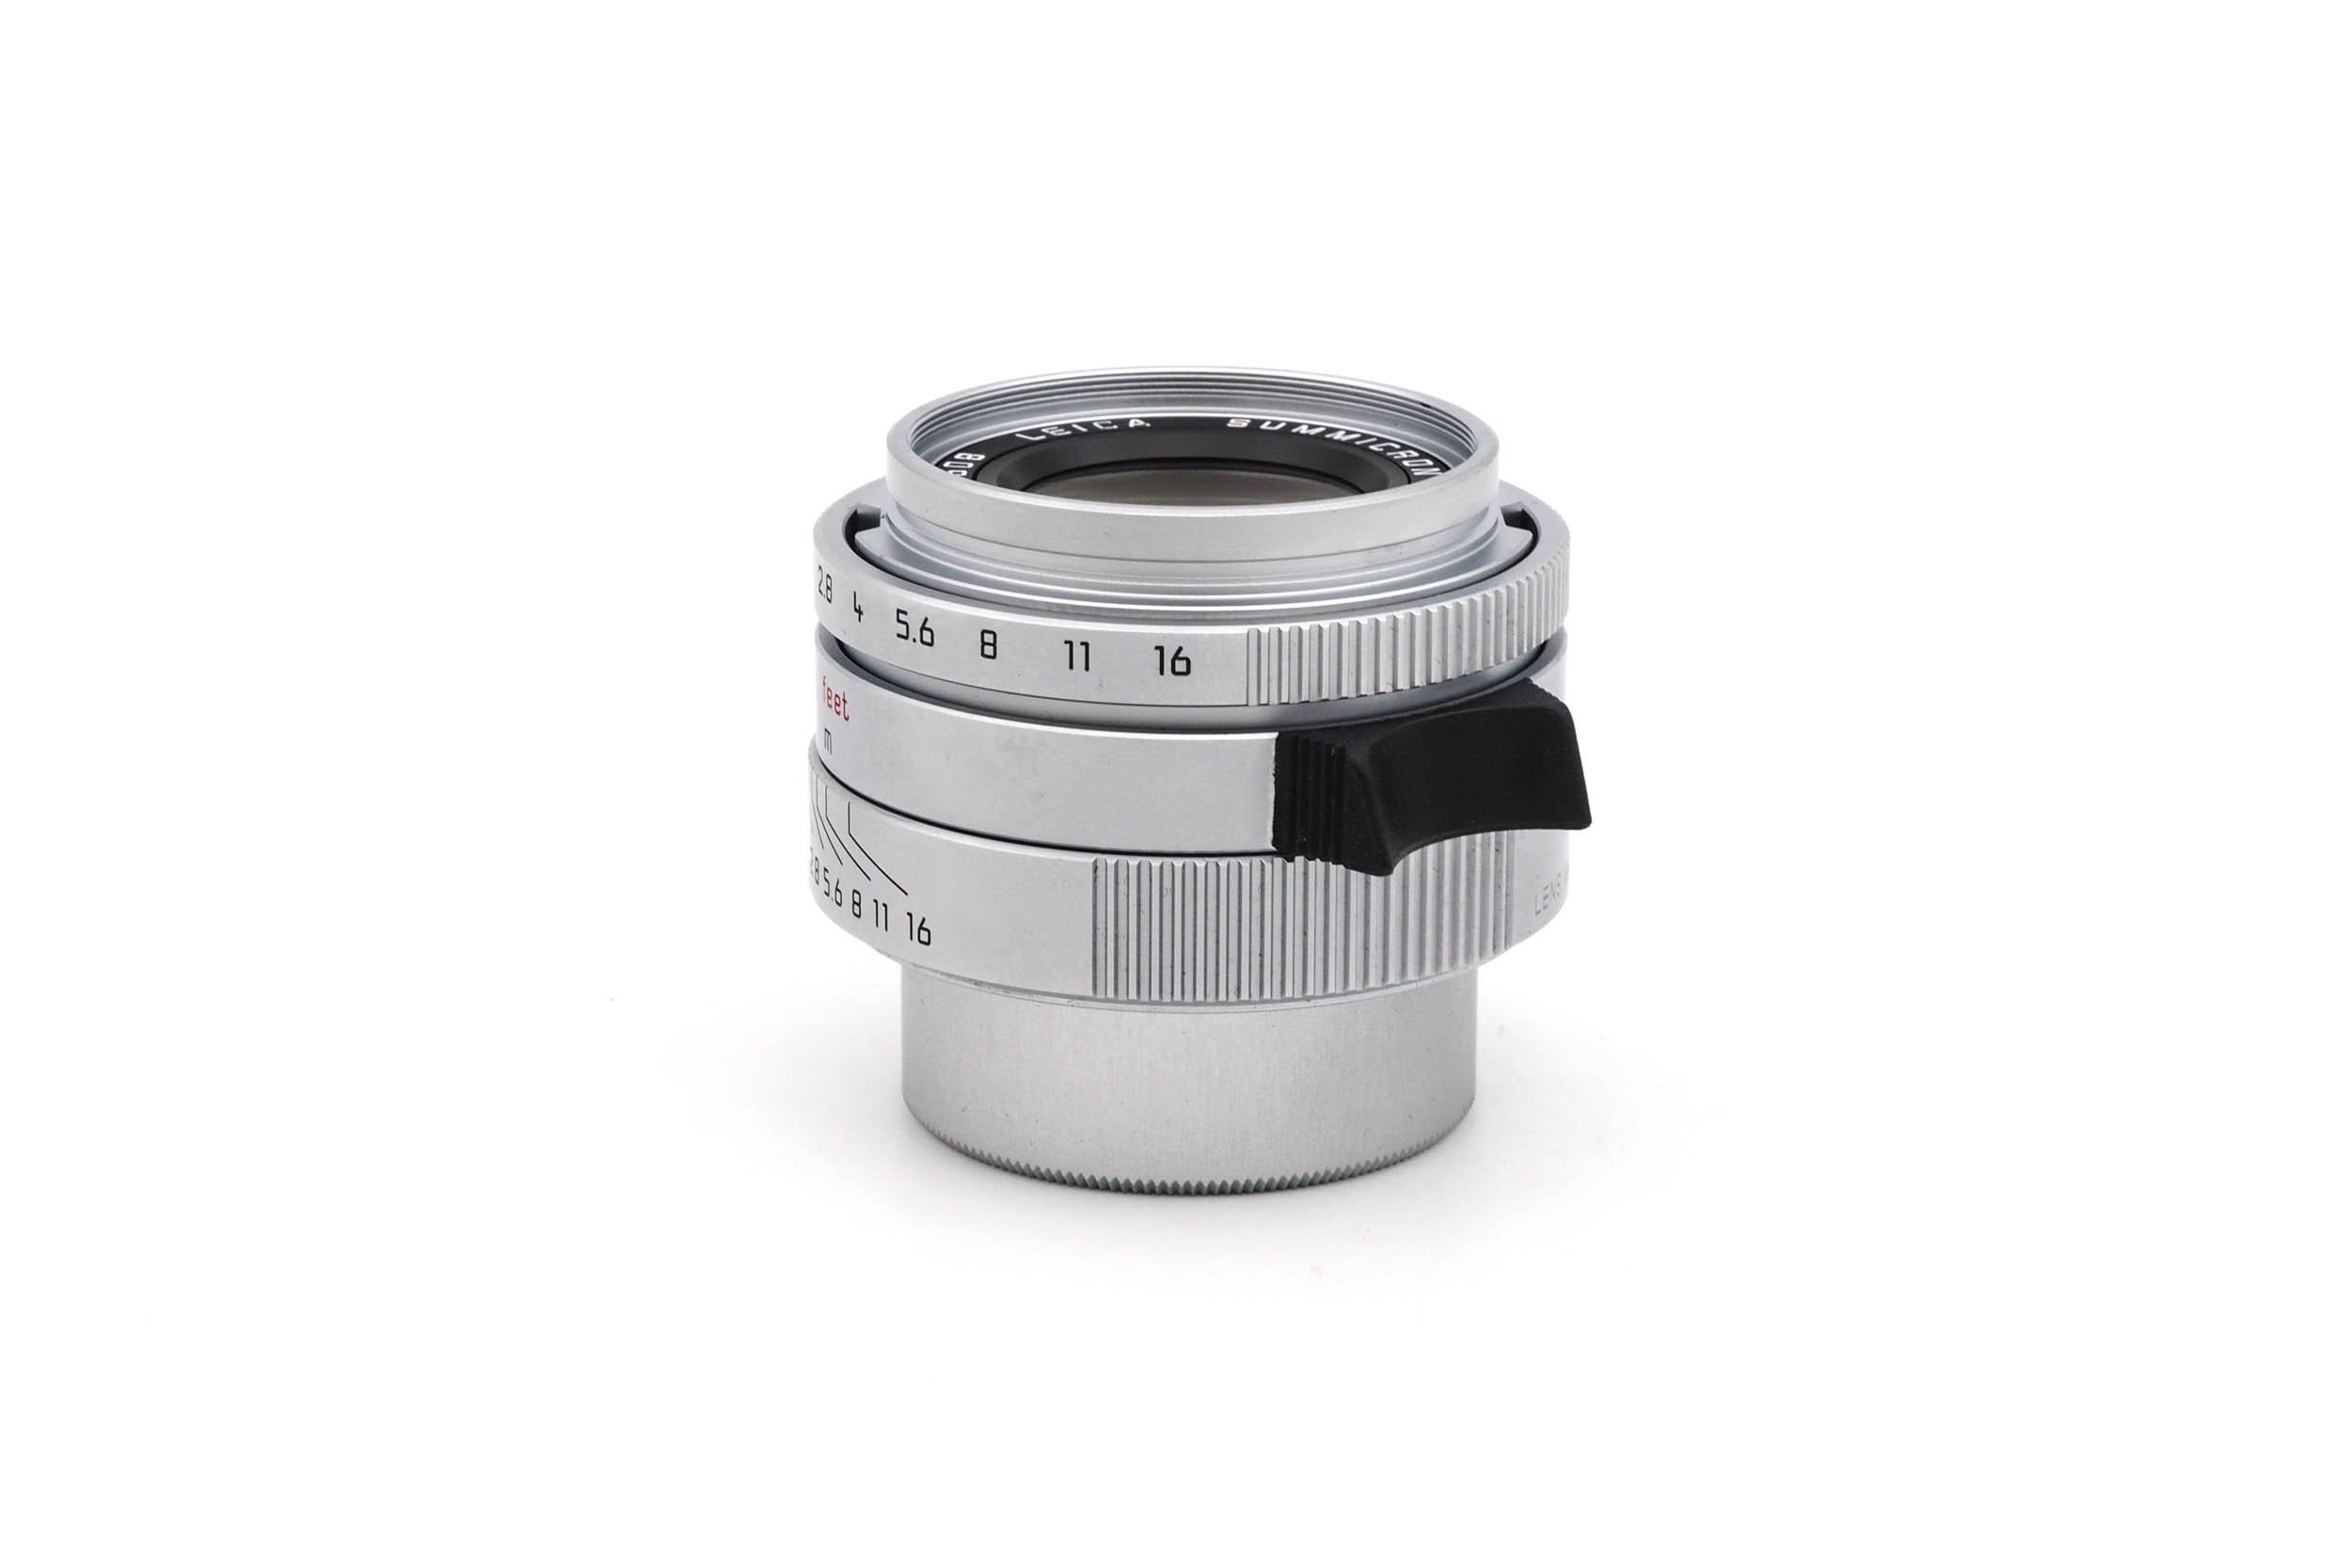 Leica 35mm f/2 Summicron ASPH. M39 "Special Edition" 